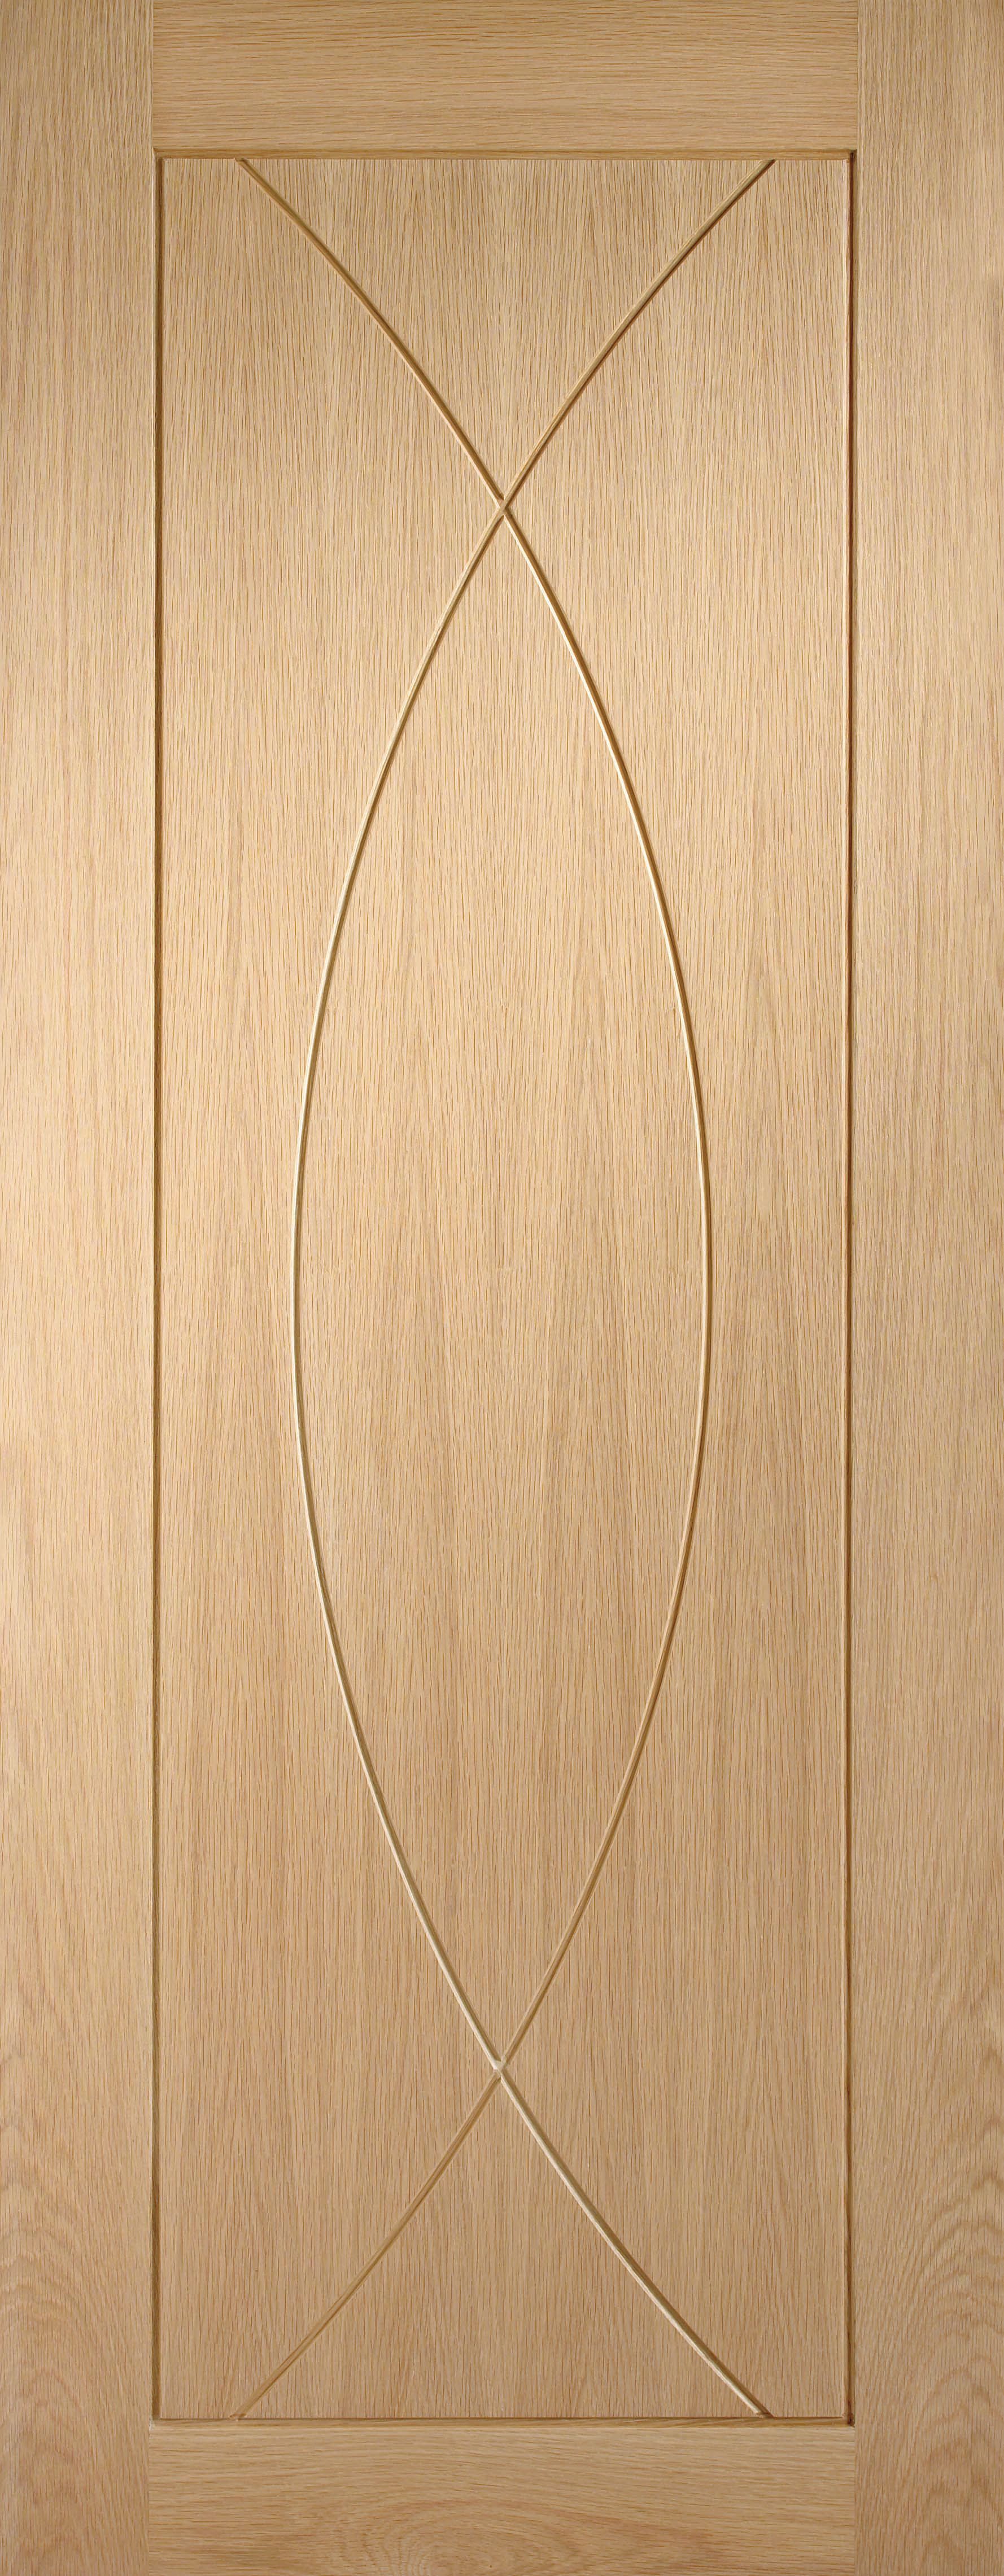 Image of XL Joinery Pesaro Oak Patterned Internal Door - 1981 x 838mm